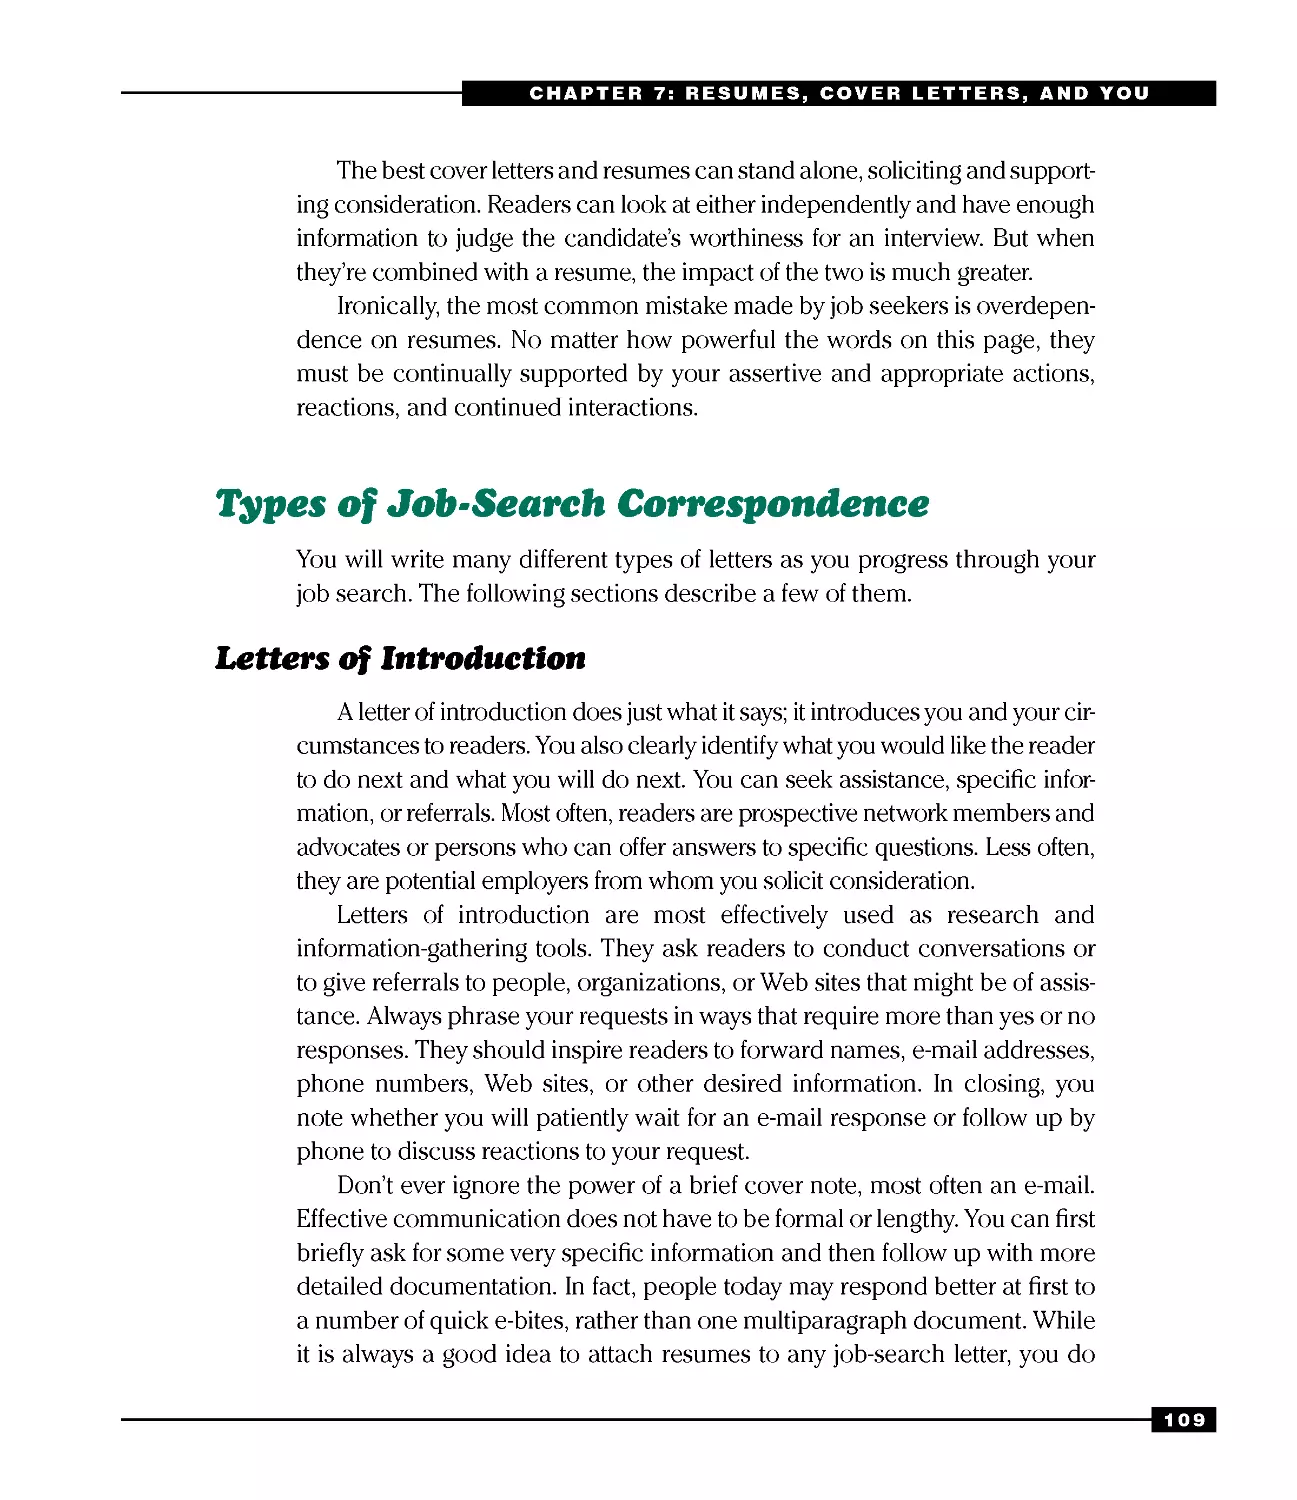 Types of Job-Search Correspondence